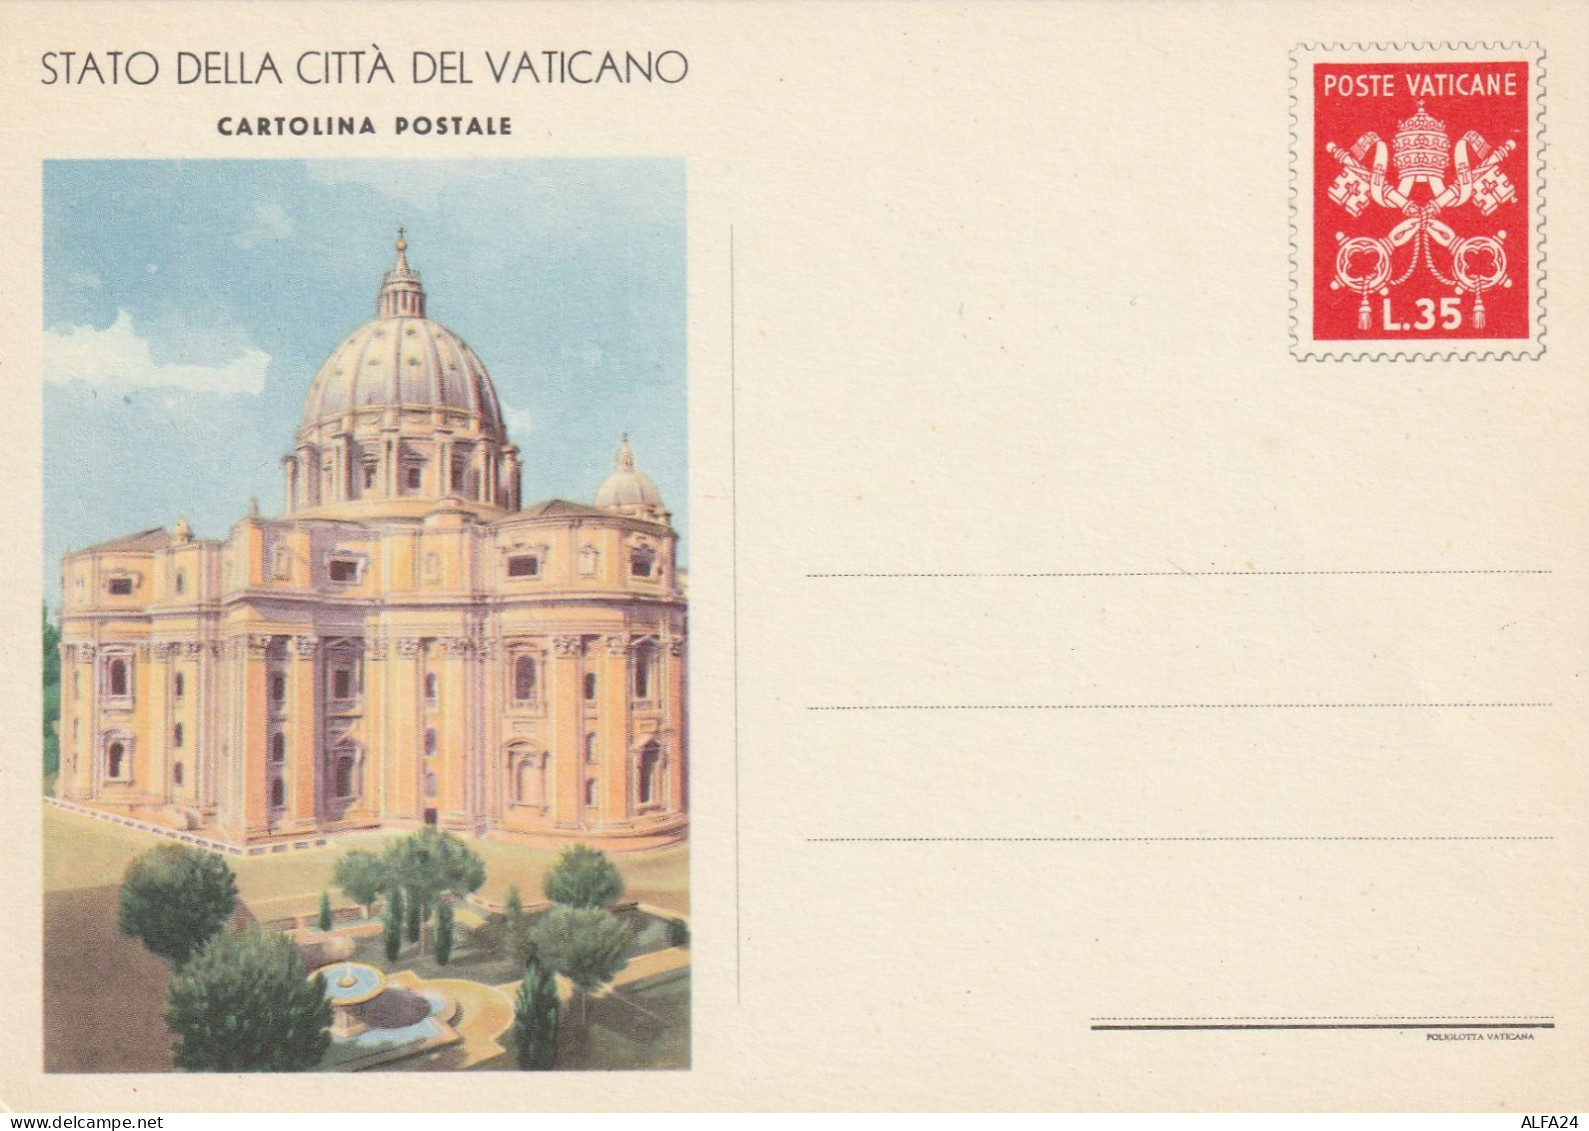 INTERO POSTALE NUOVO L.35 1950 VATICANO (ZP3804 - Postal Stationeries